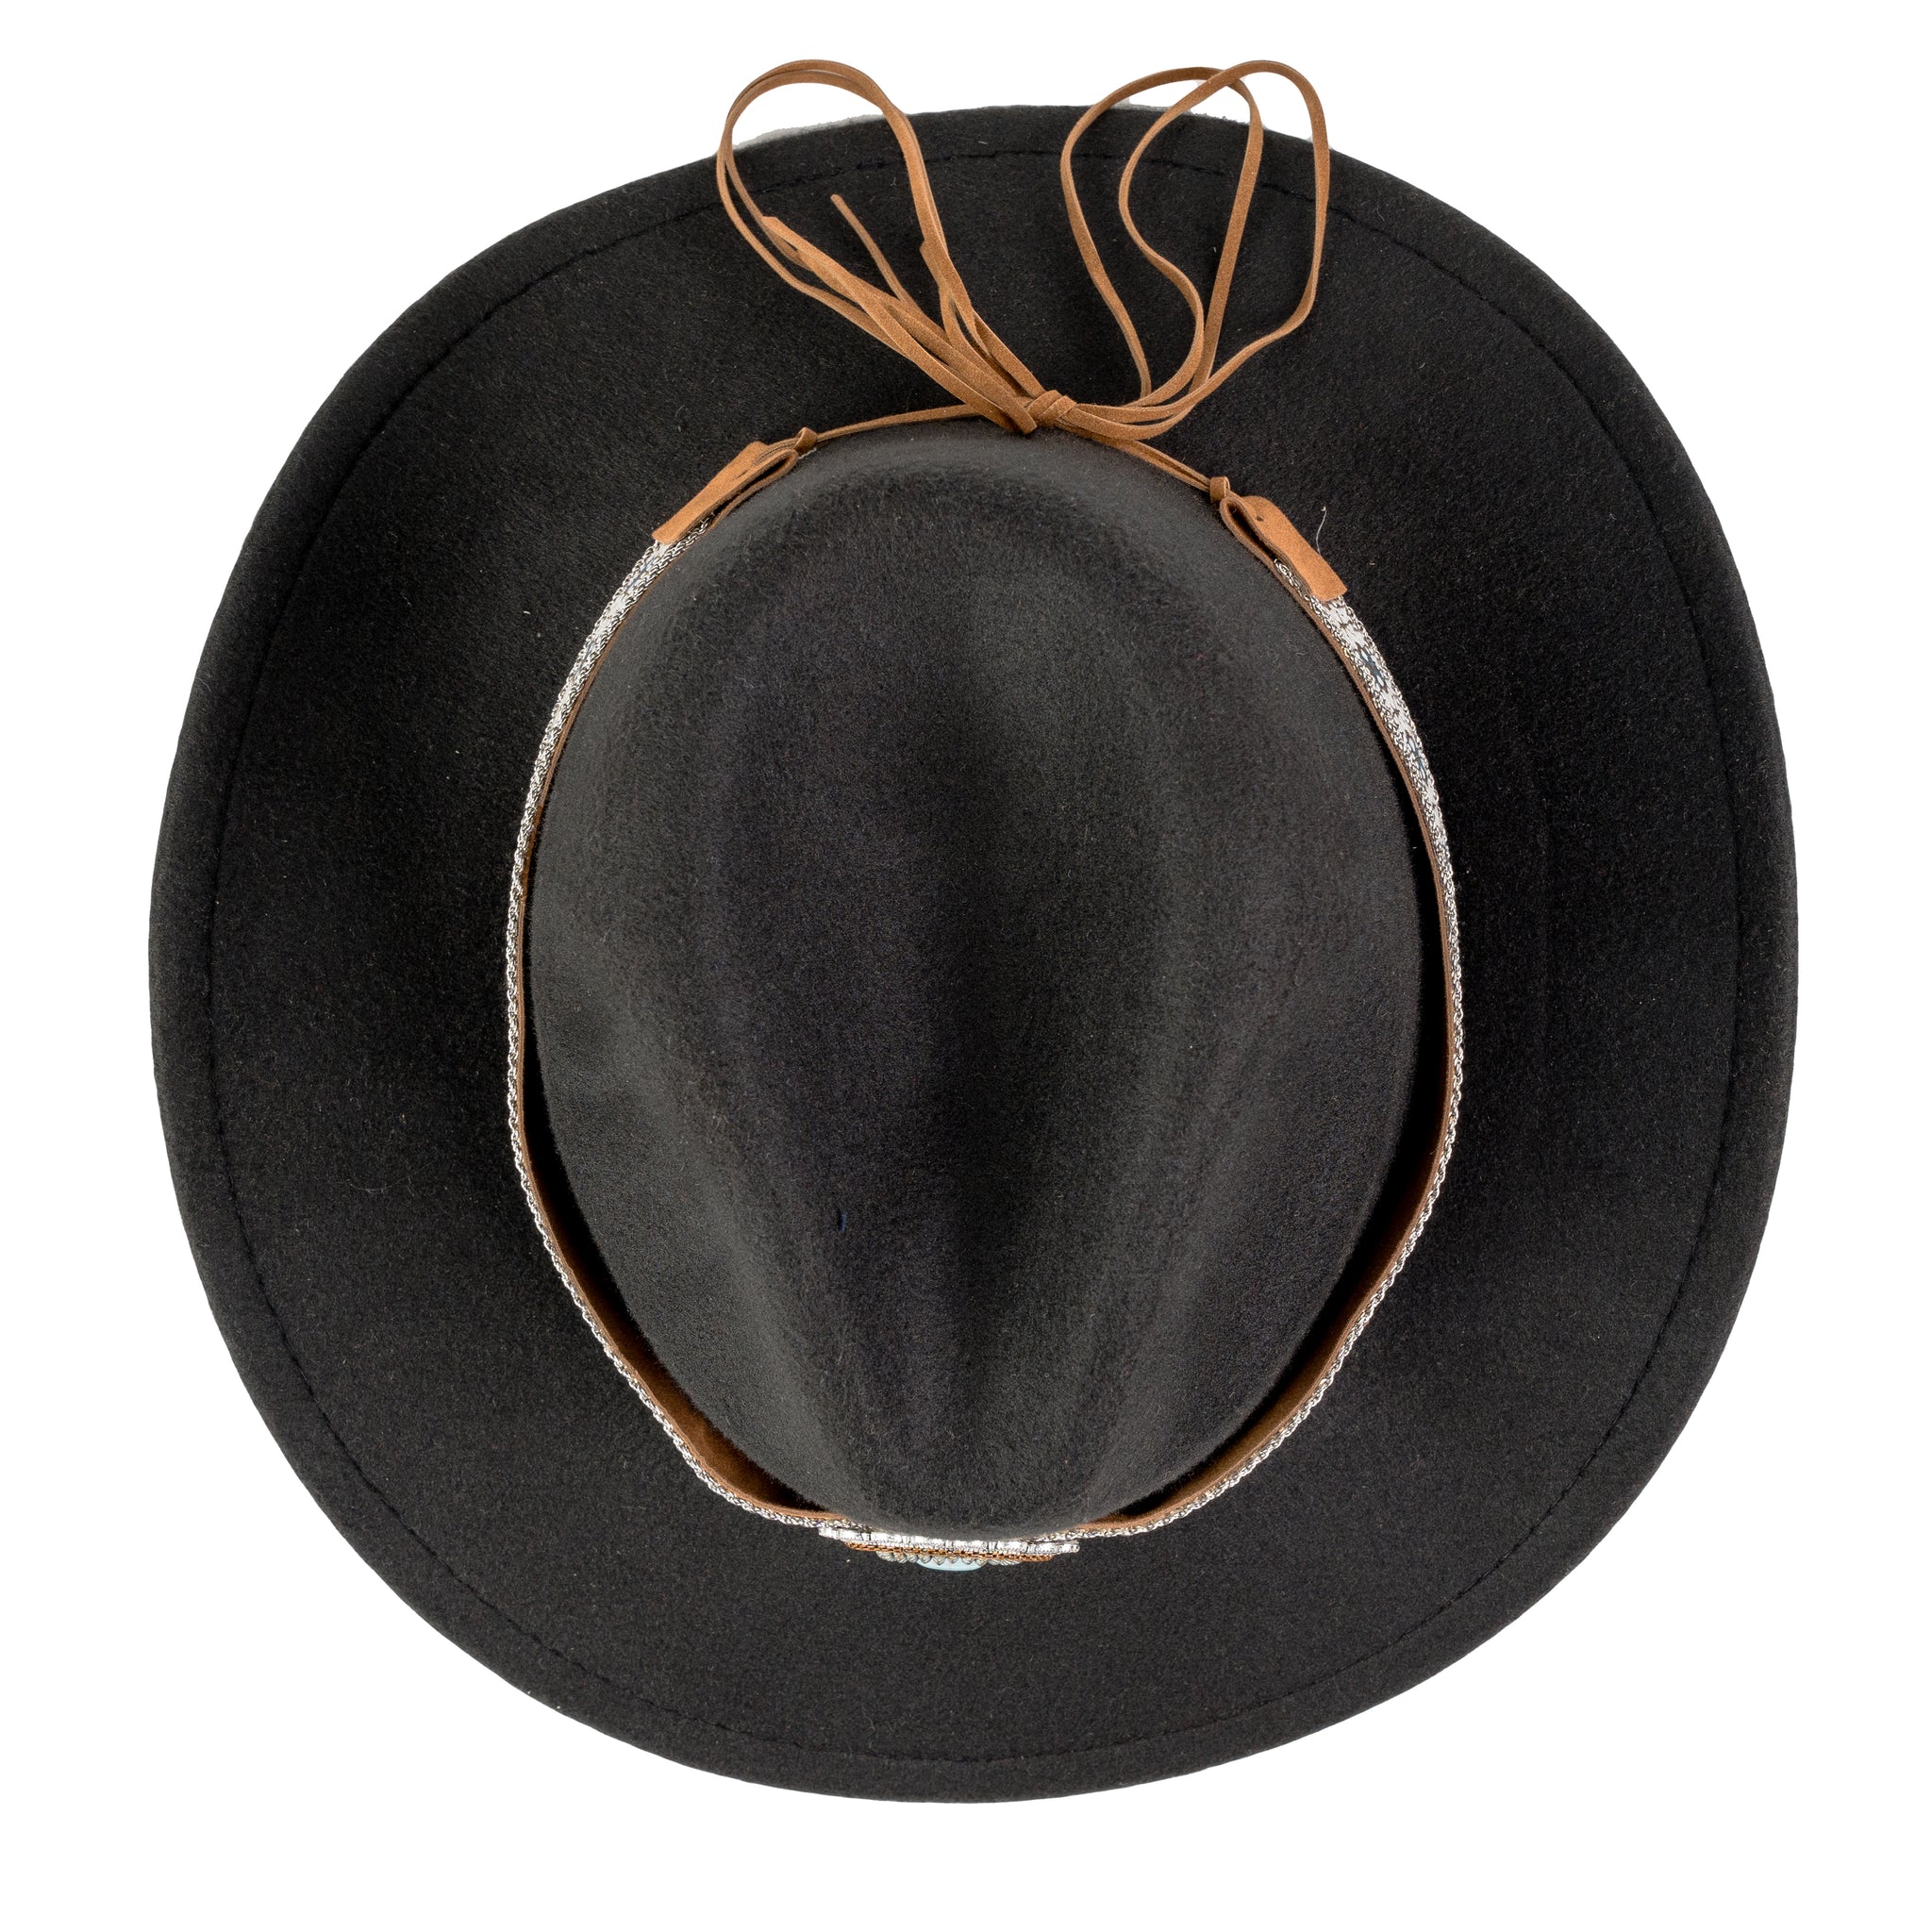 Chokore Ethnic Tibetan Cowboy Hat (Black)